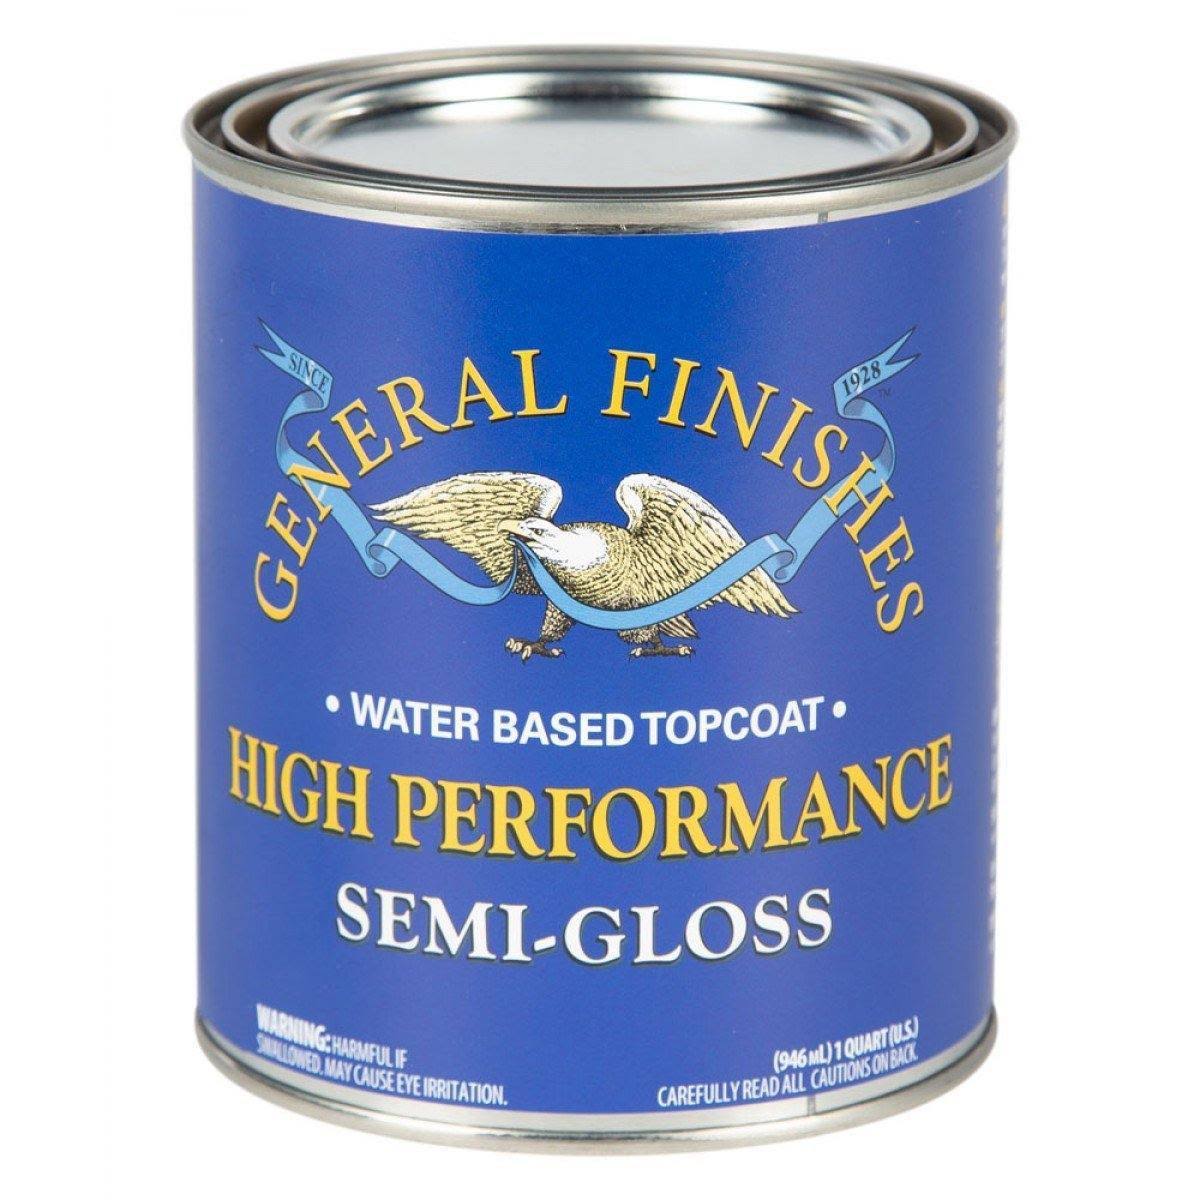 General Finishes QTHSG High Performance Water Based Topcoat - 1 qt, Semi-Gloss